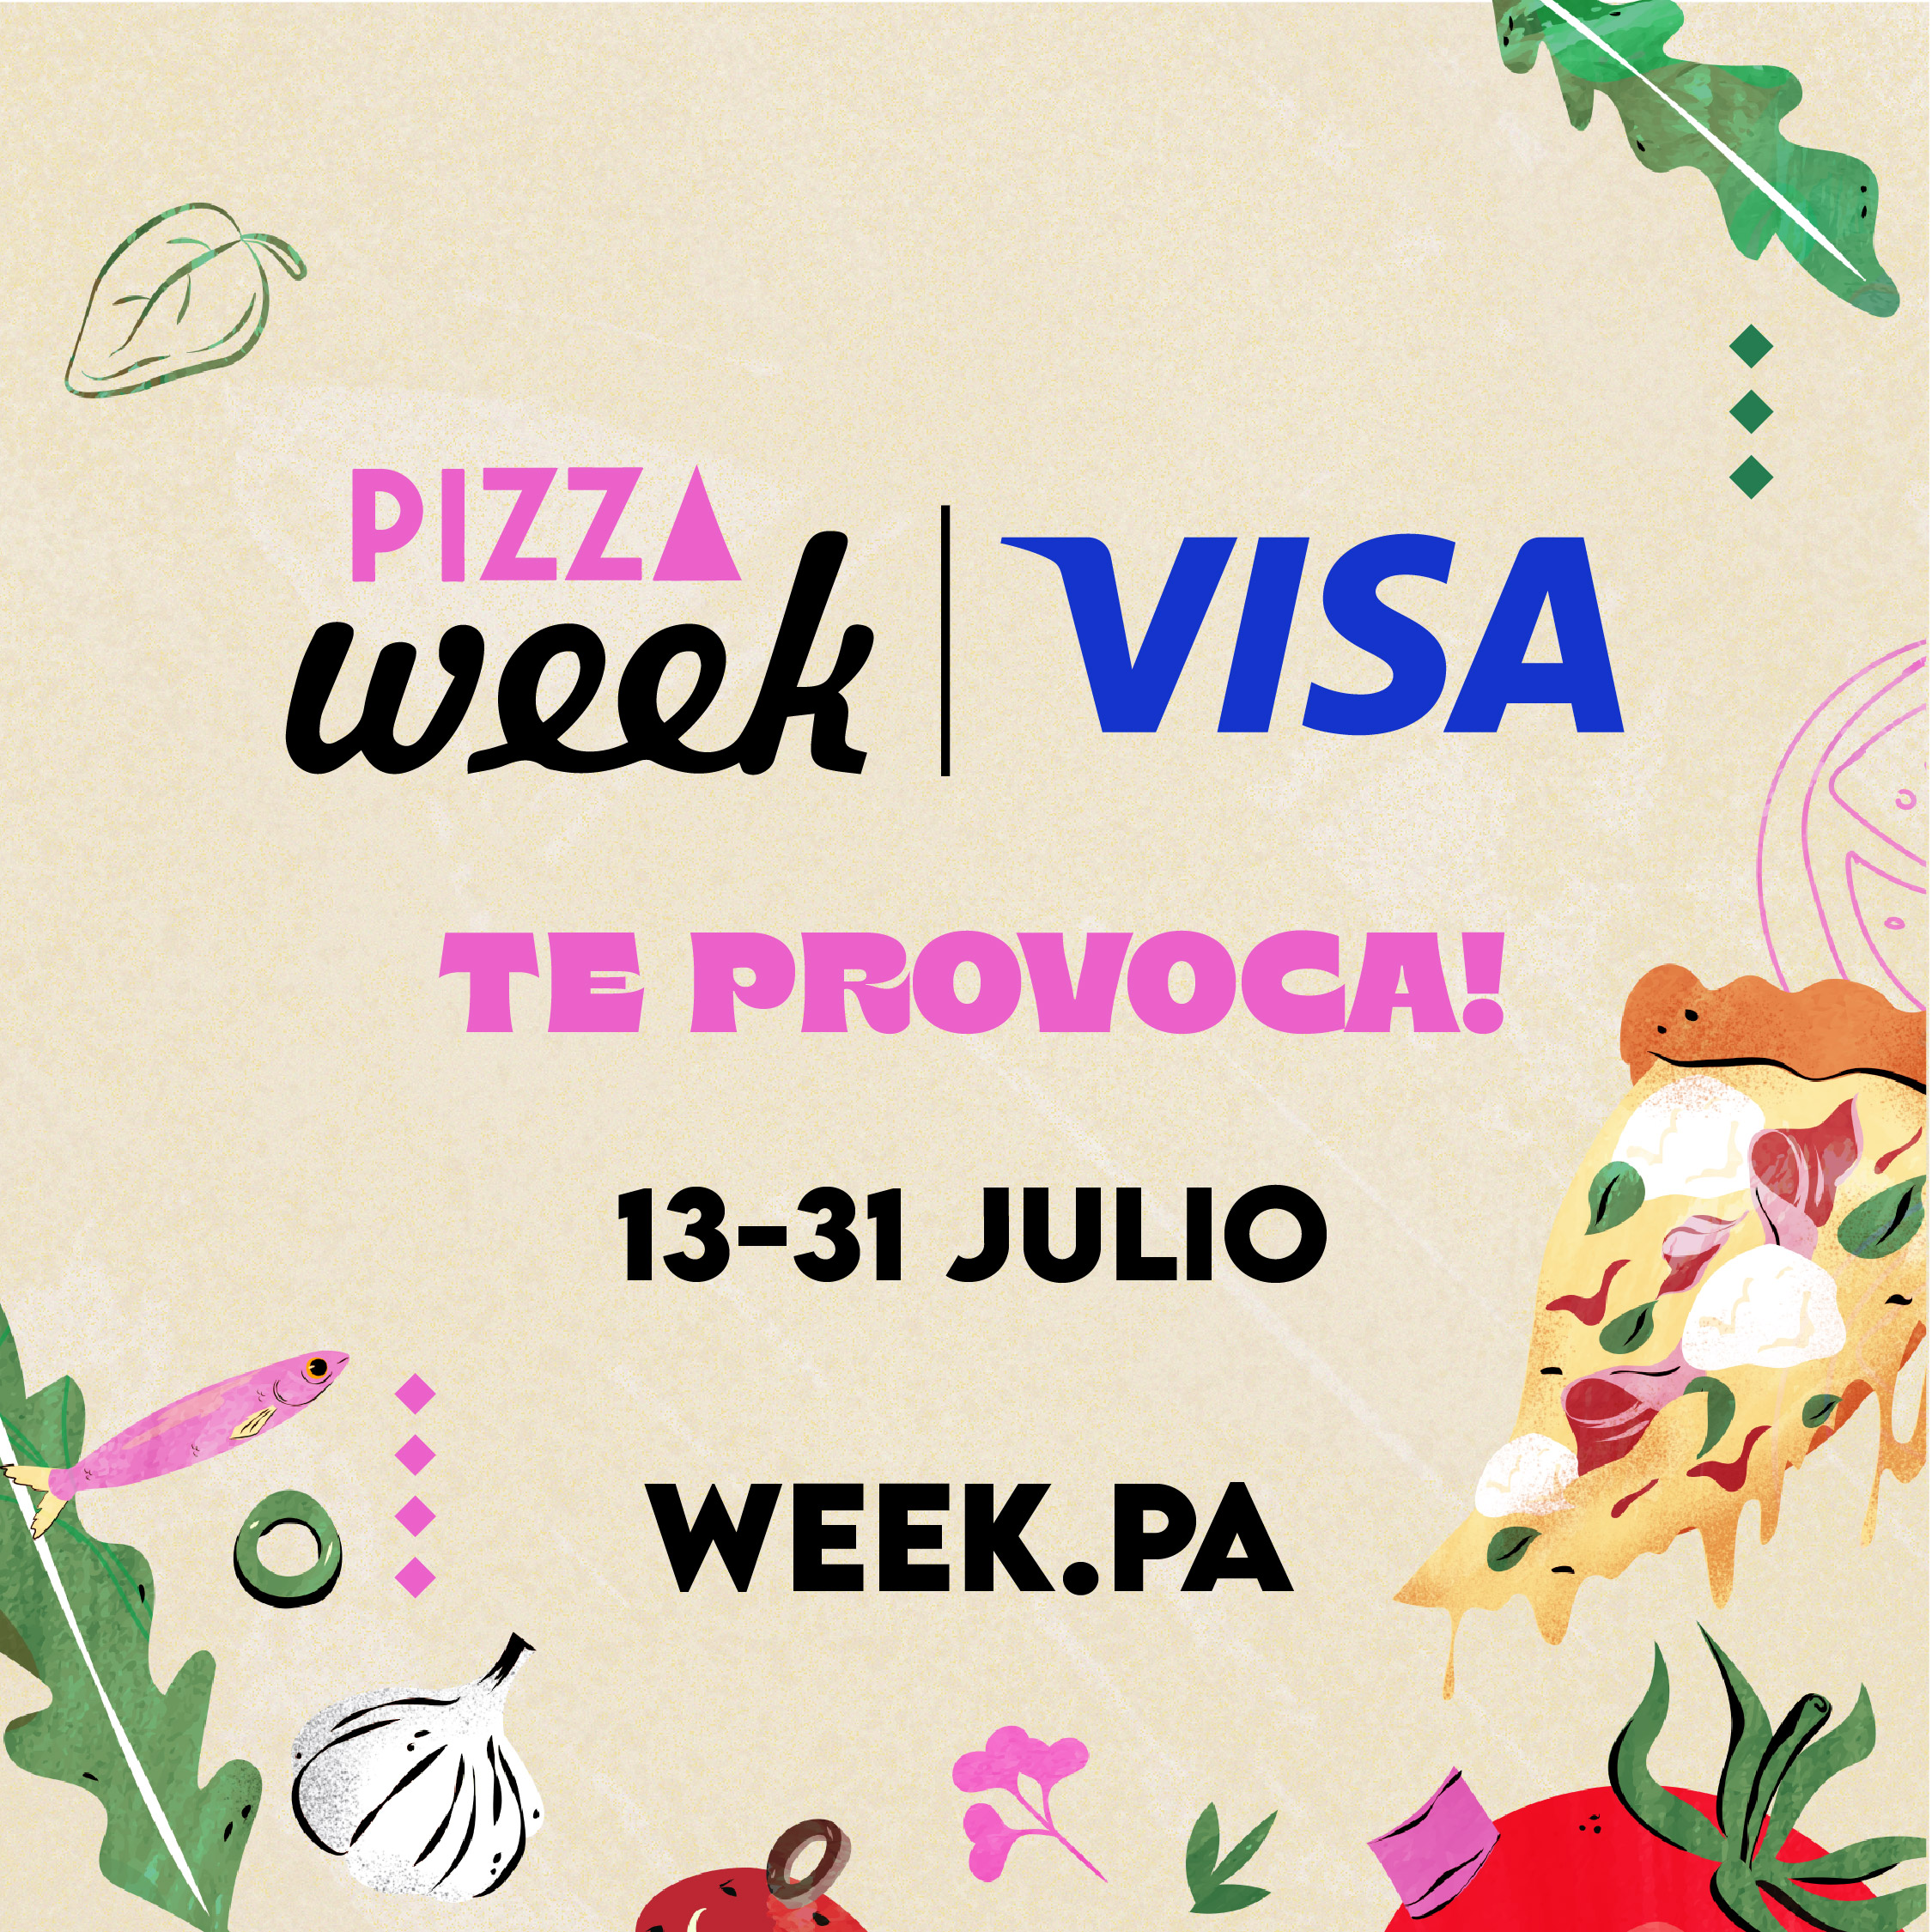 ¡PIZZA WEEK LLEGA A PROVOCAR TUS SENTIDOS!